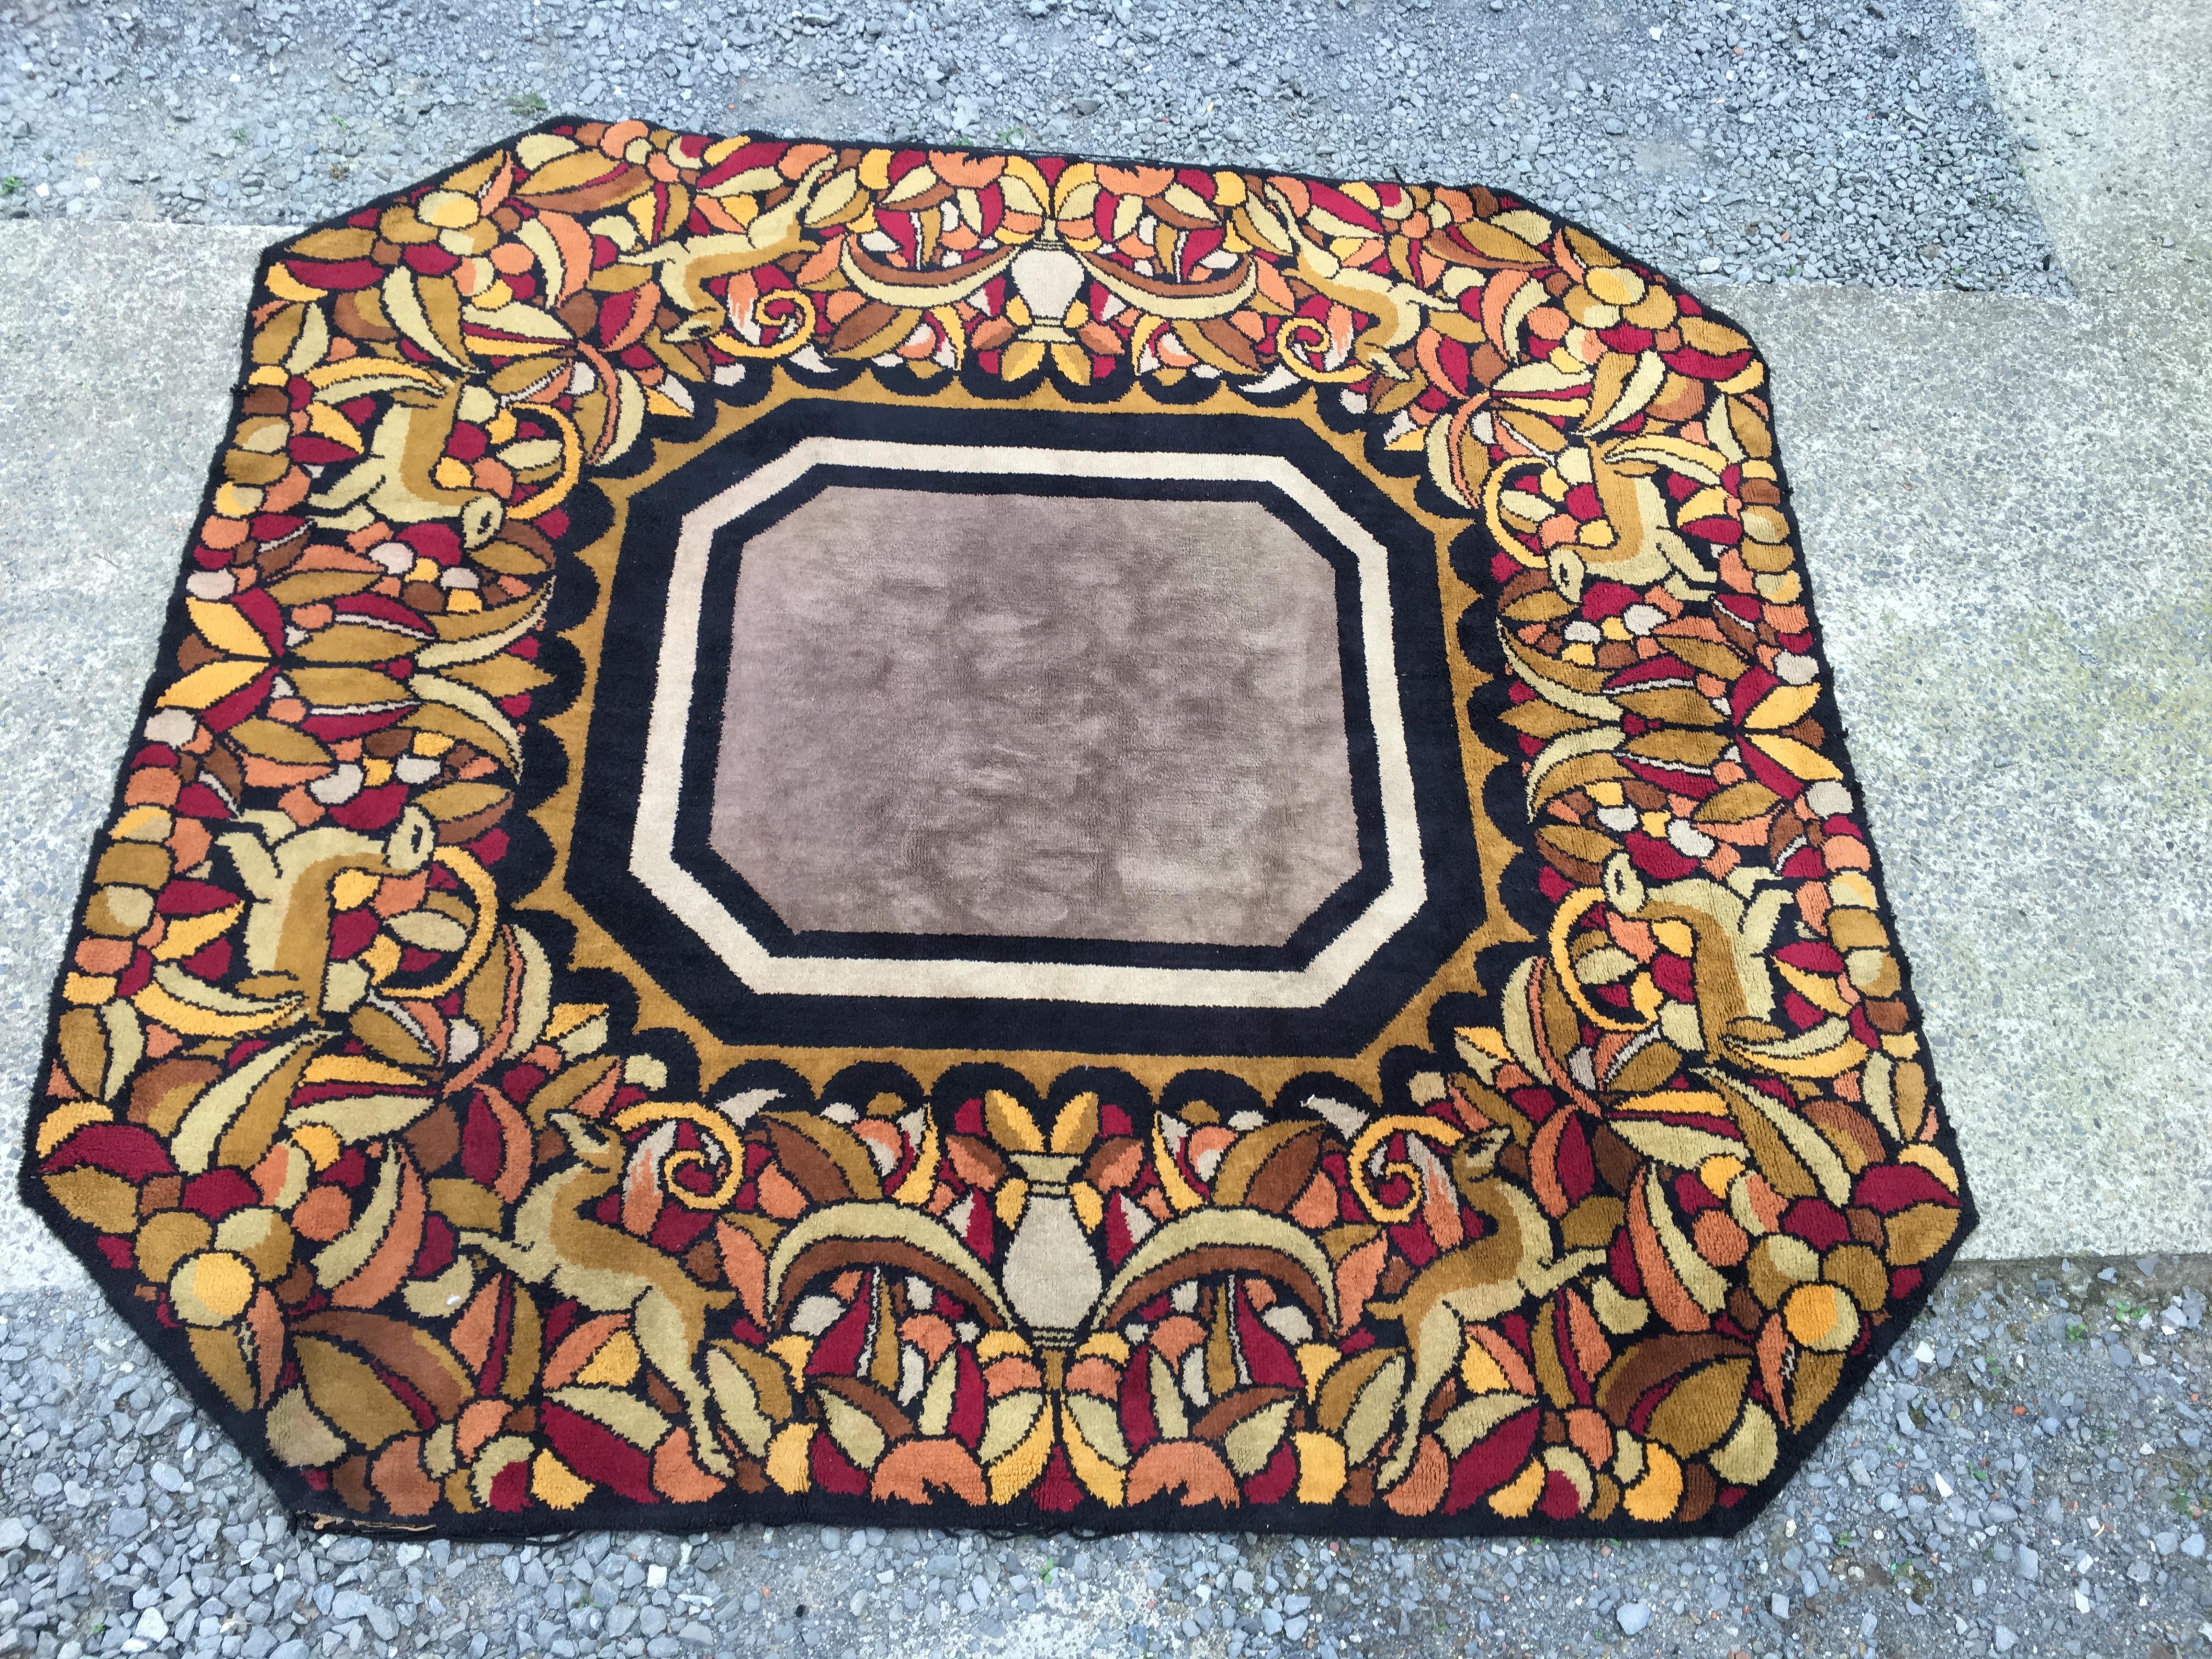 1930s carpet patterns